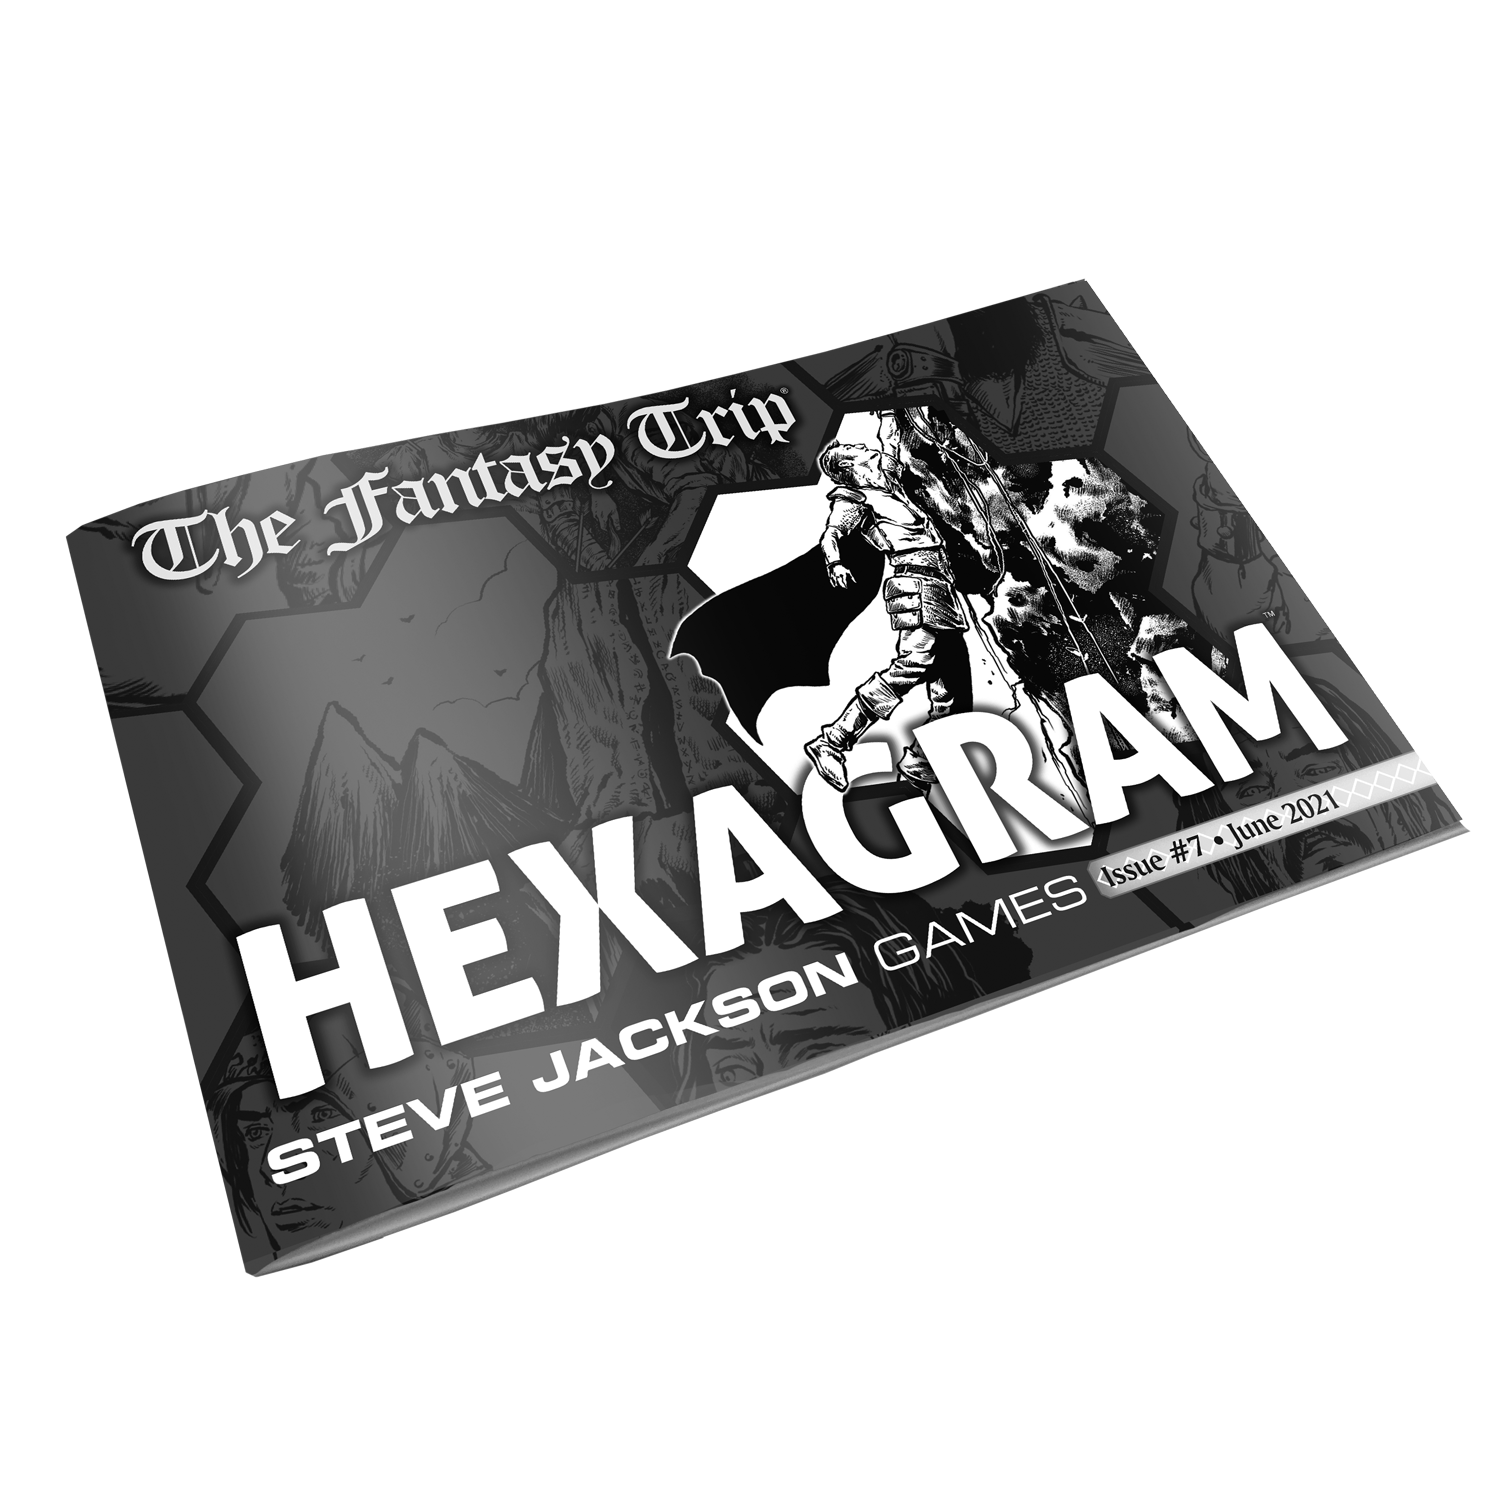 Hexagram – Issue #7